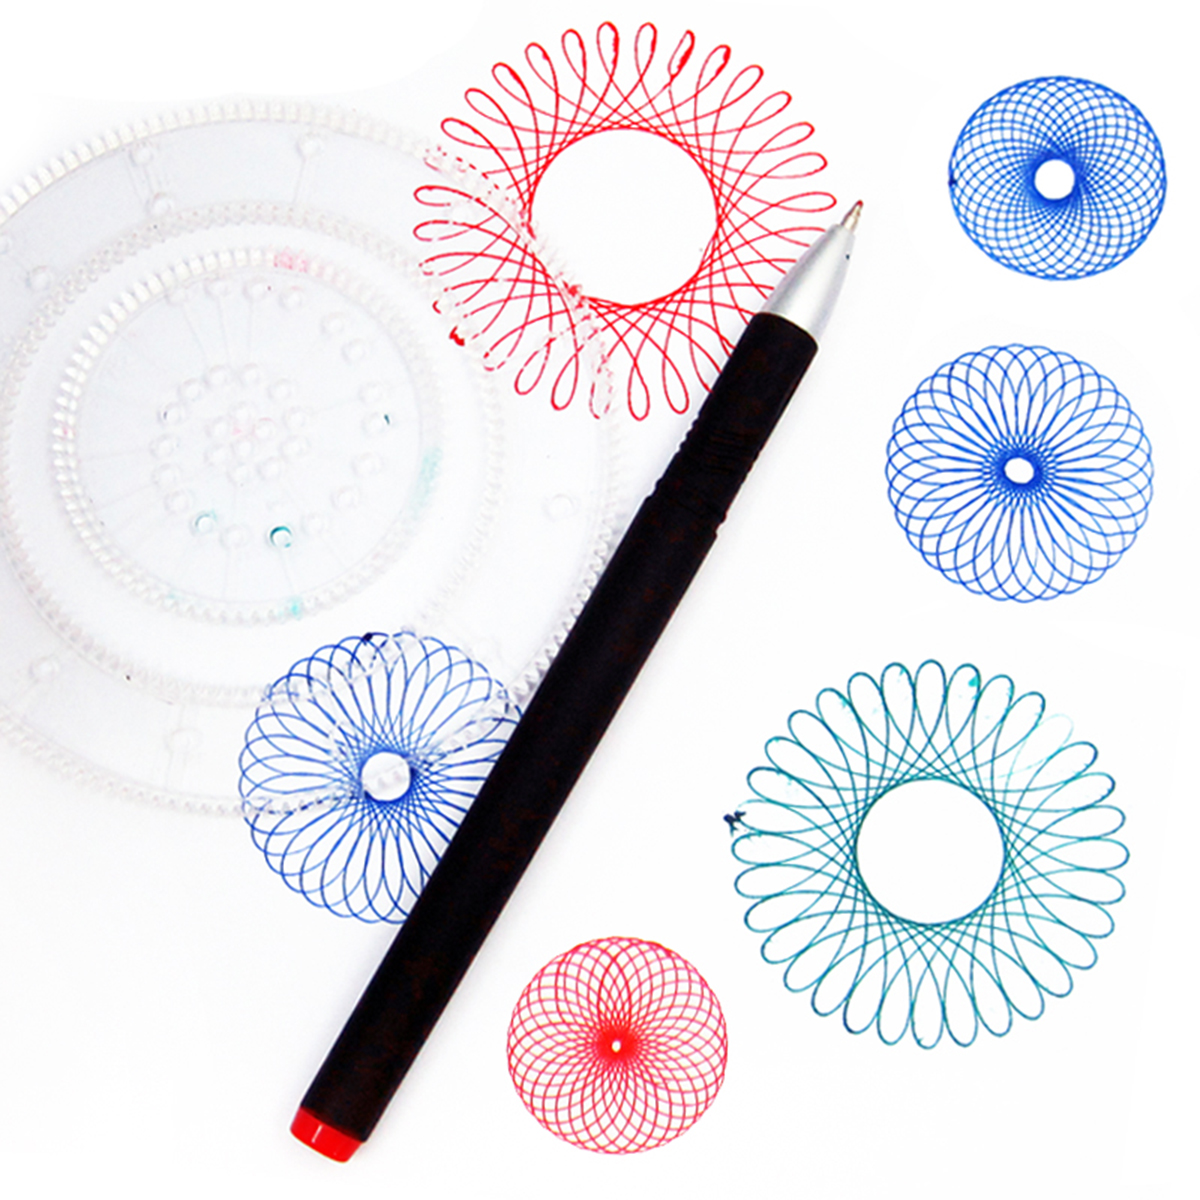 Original Spirograph Design Set Geometric Drawing Ruler Kids Spiral Art Craft Creation Education Toy 34